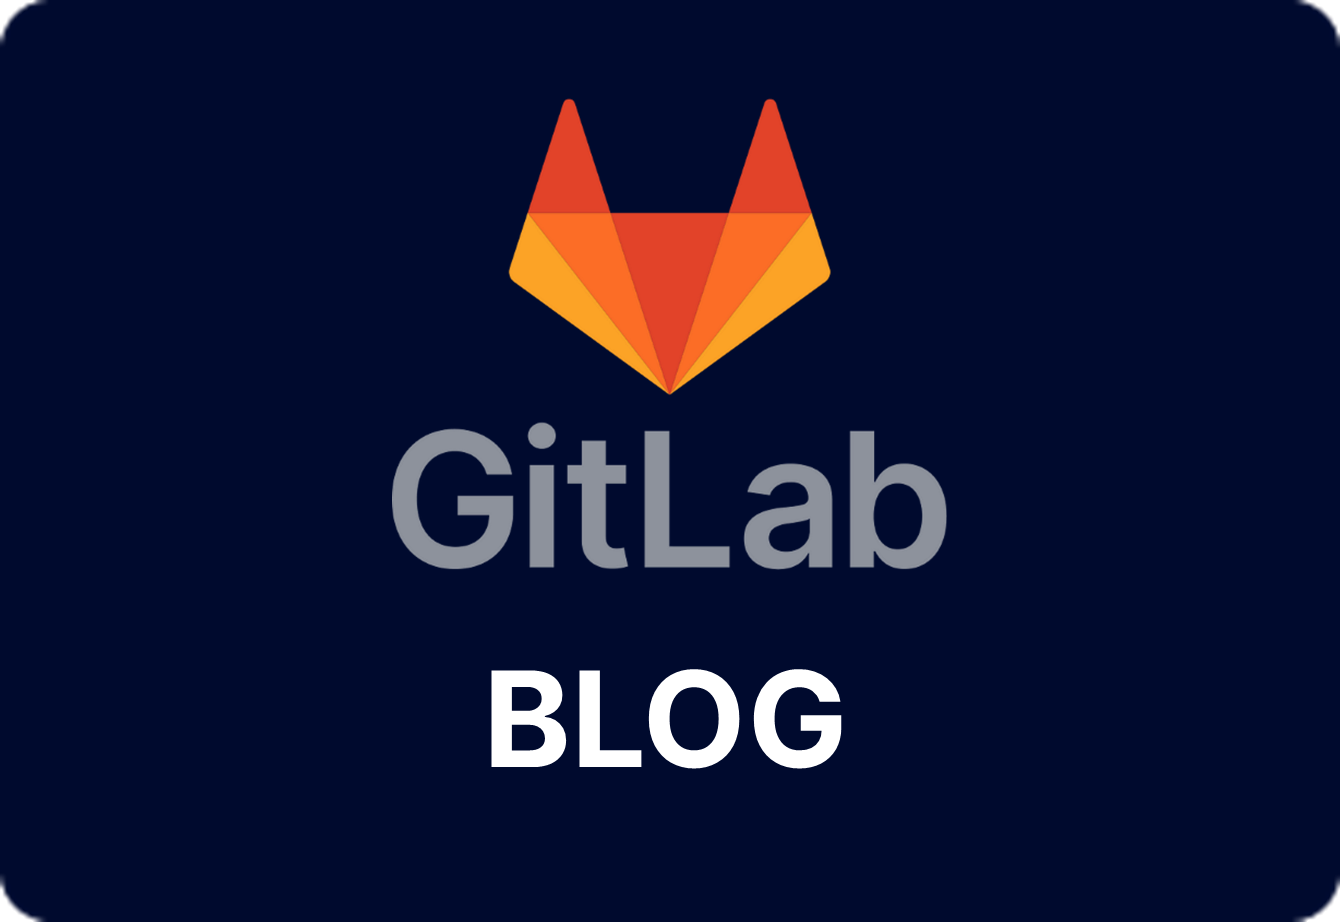 GitLab Blog